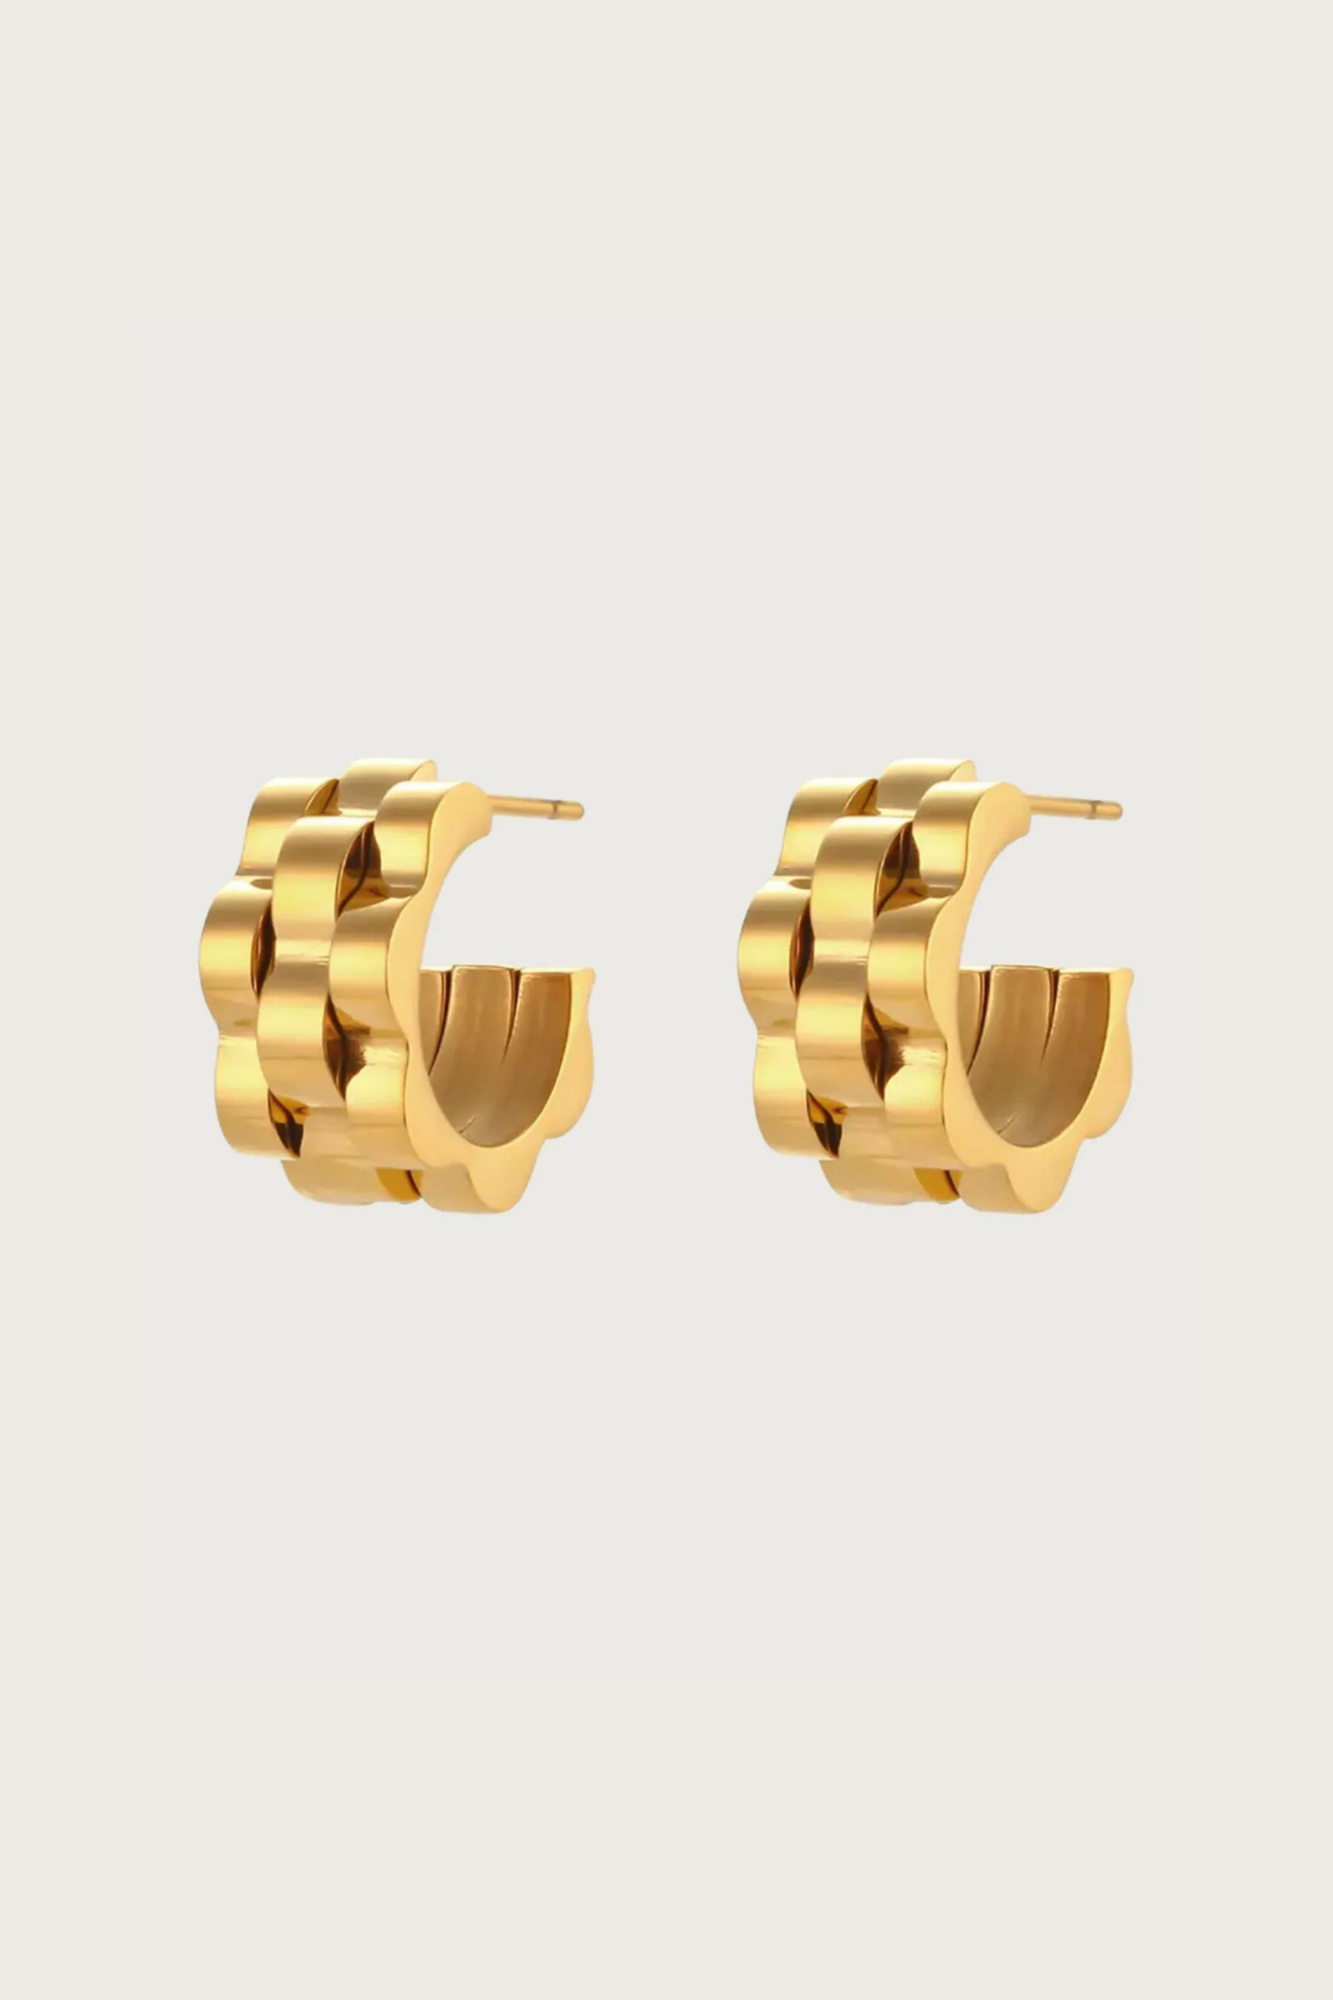 18k Gold Plated Stainless Steel Earrings